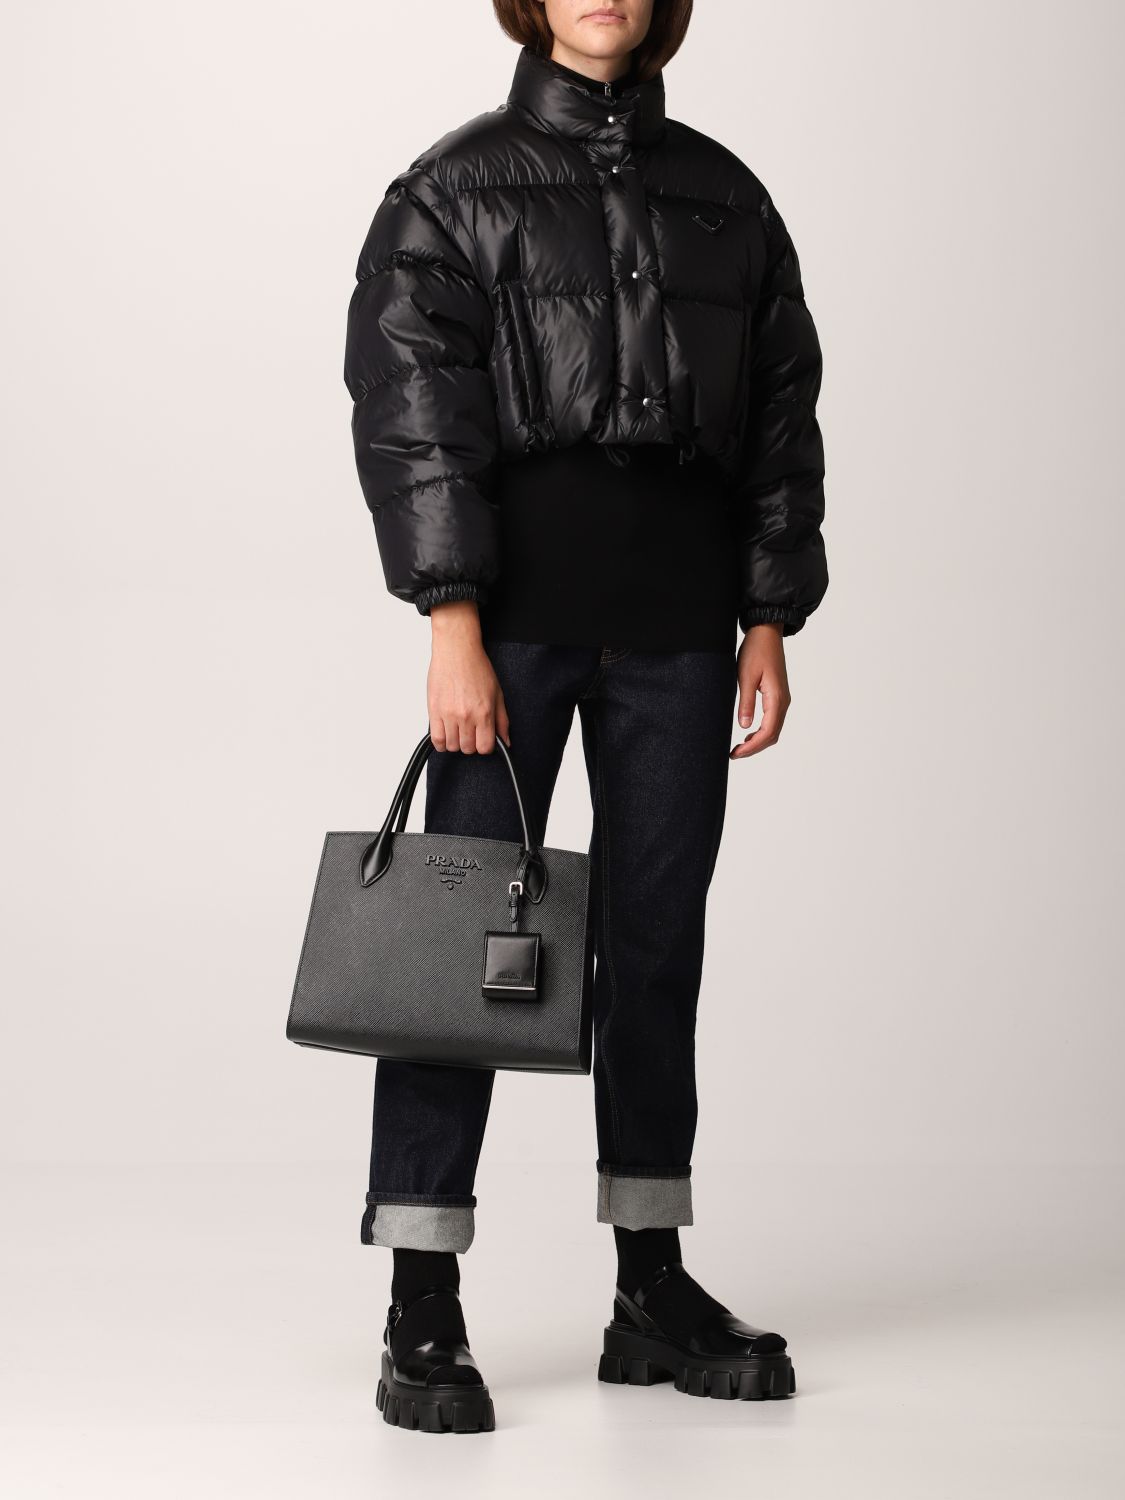 PRADA: Monochrome bag in saffiano leather - Black  Prada crossbody bags  1BD127 2ERX online at